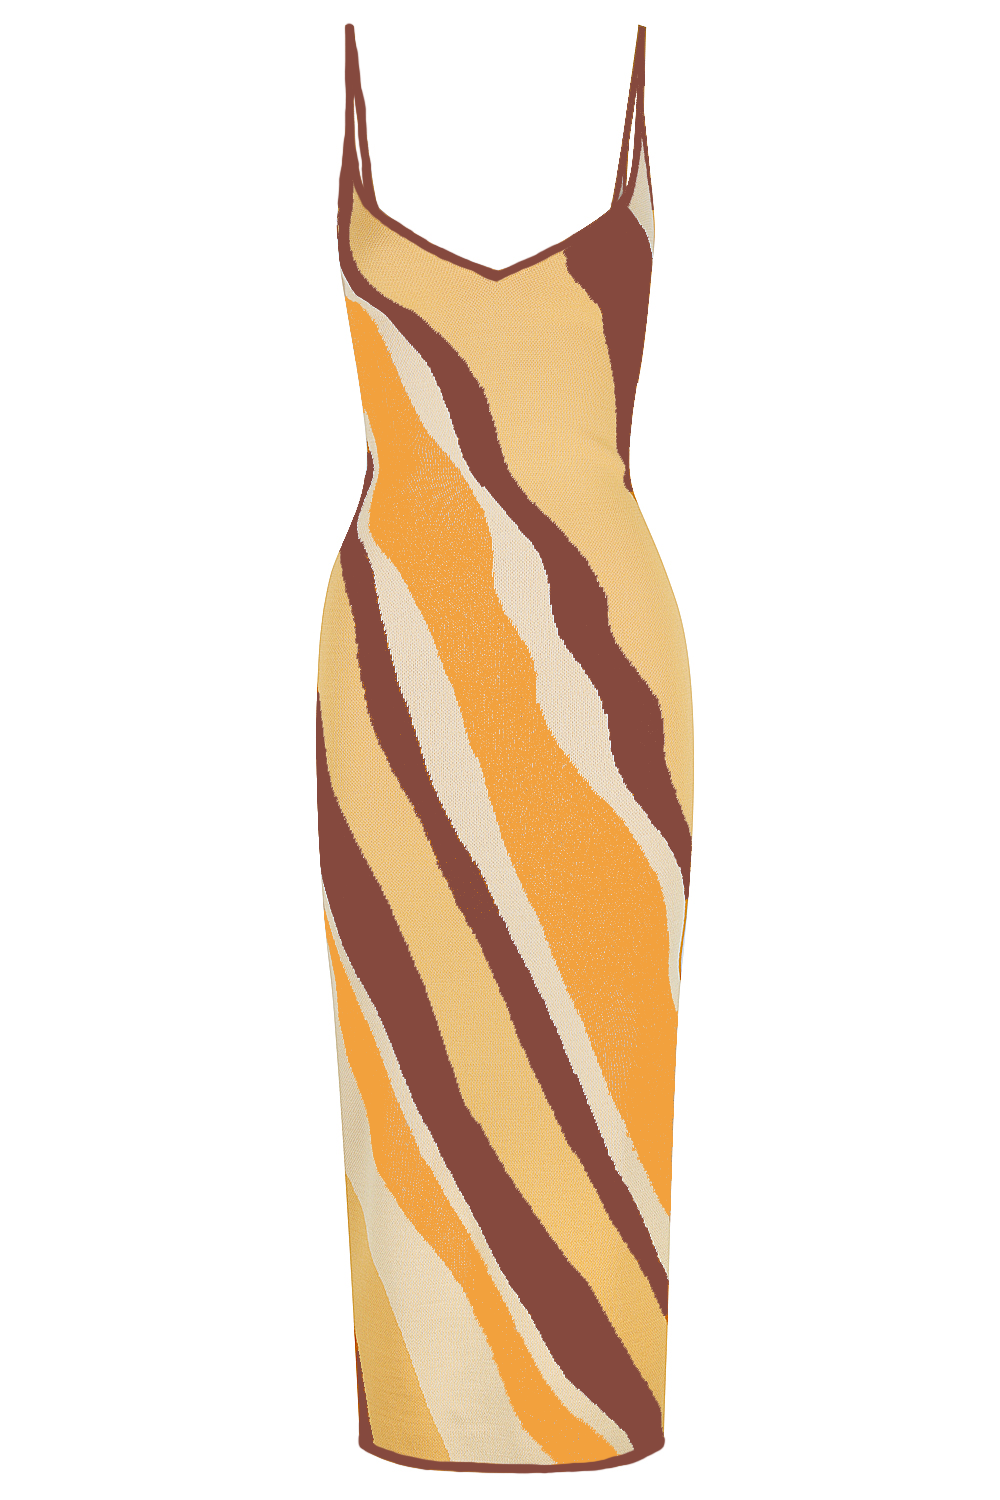 The Margarita Wave Knit Dress - Chocolate Eclair